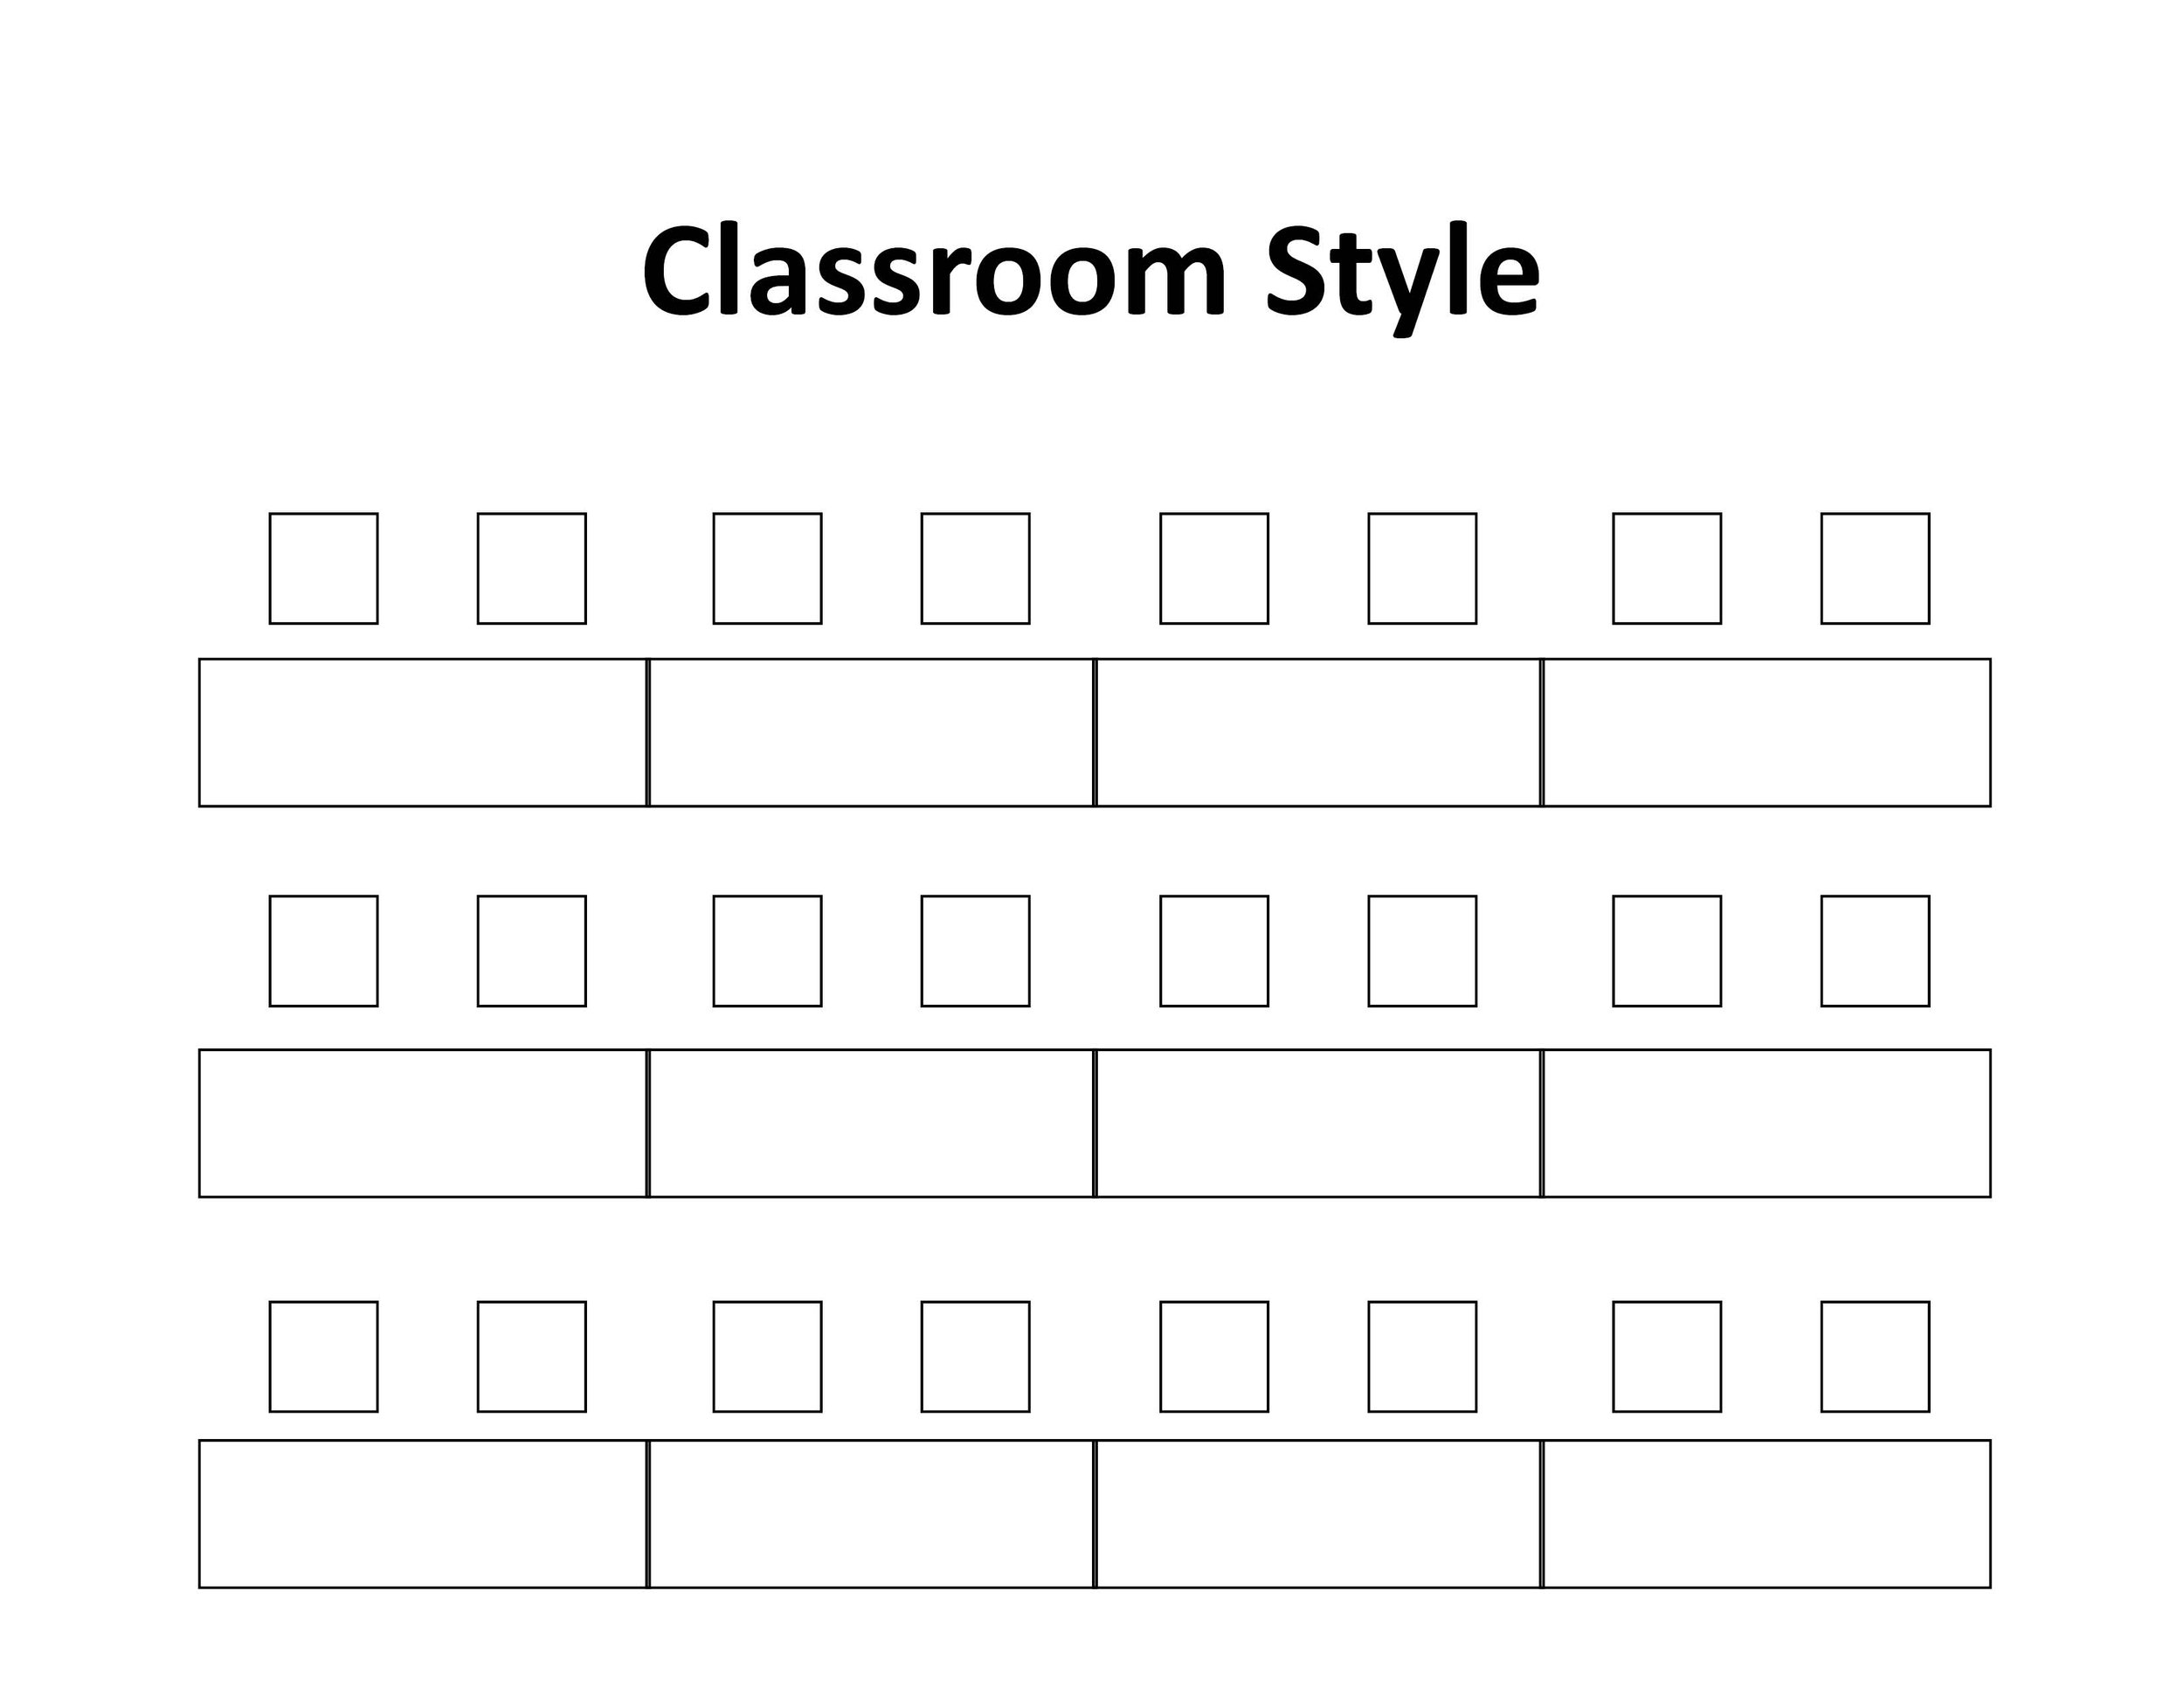 Classroom Style (Maximum seating: 24)